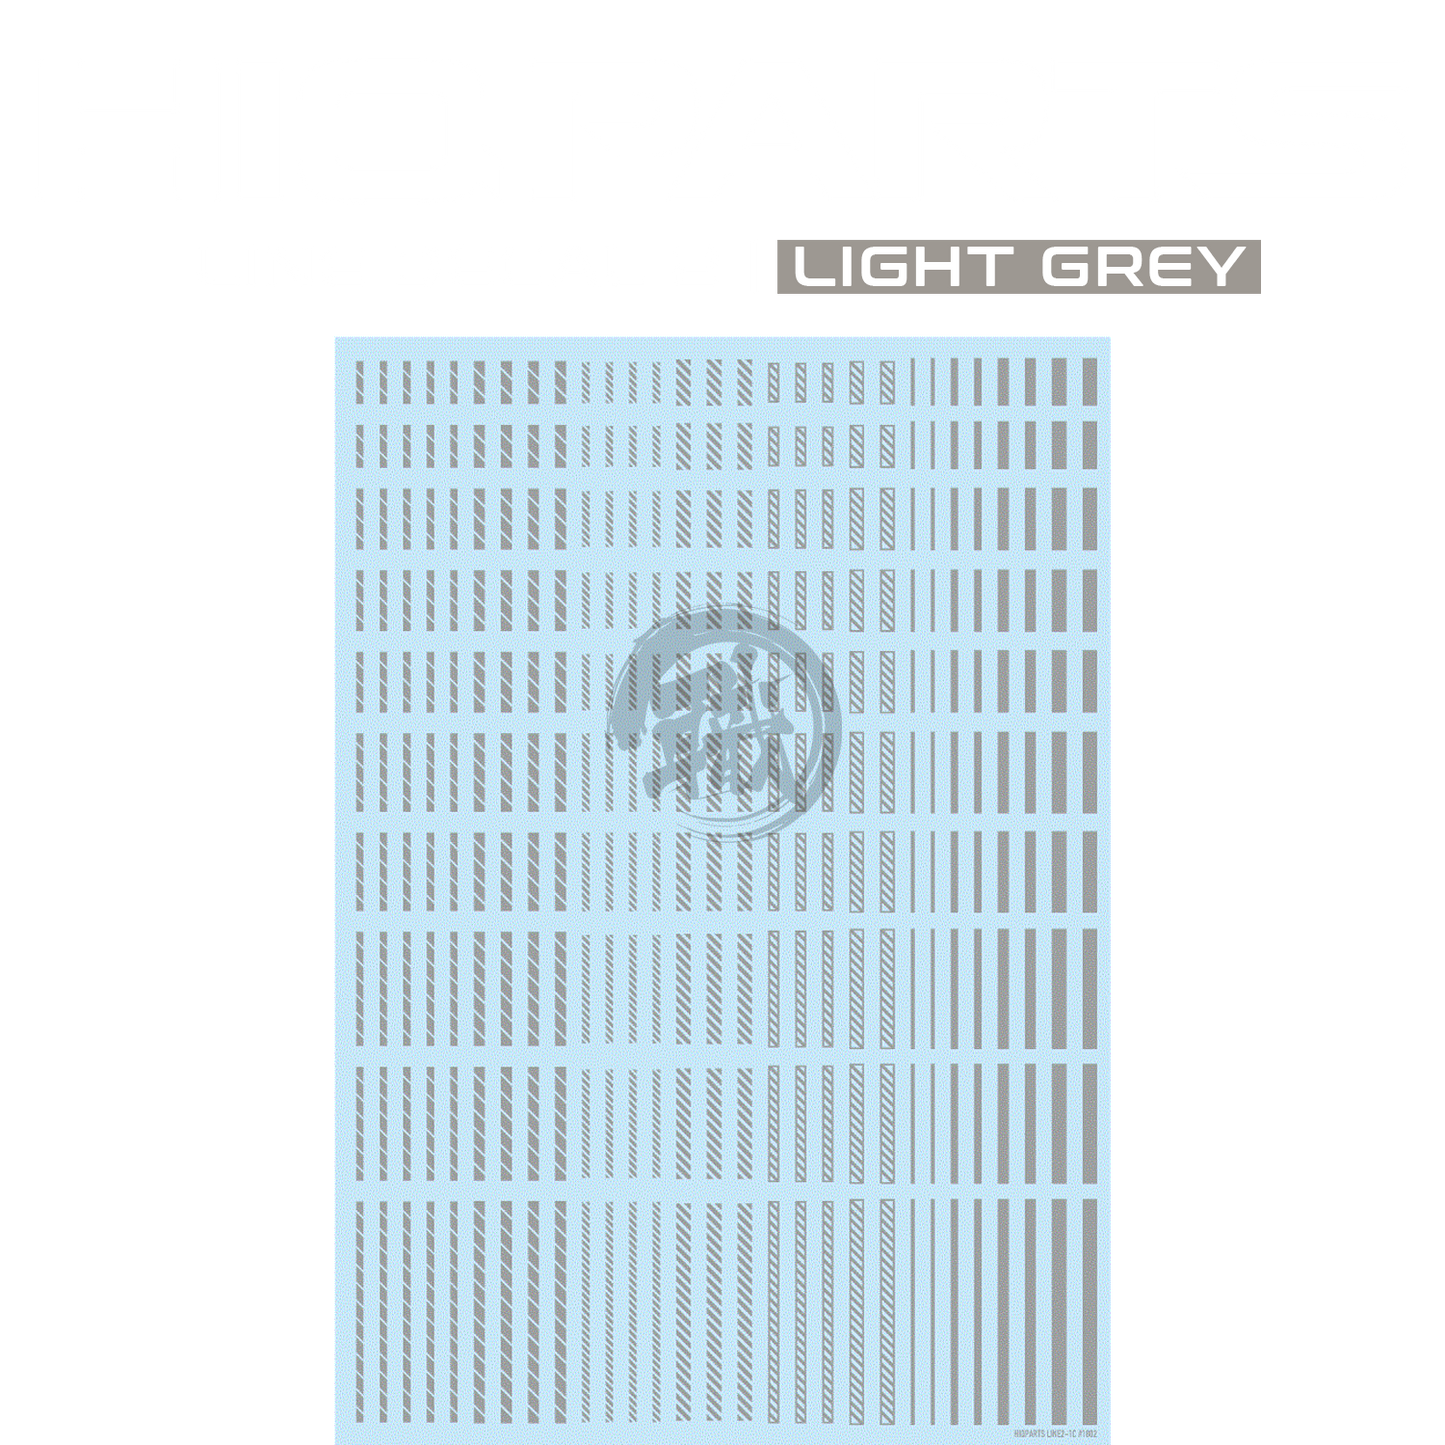 Line Decal 2 [Light Grey] - ShokuninGunpla